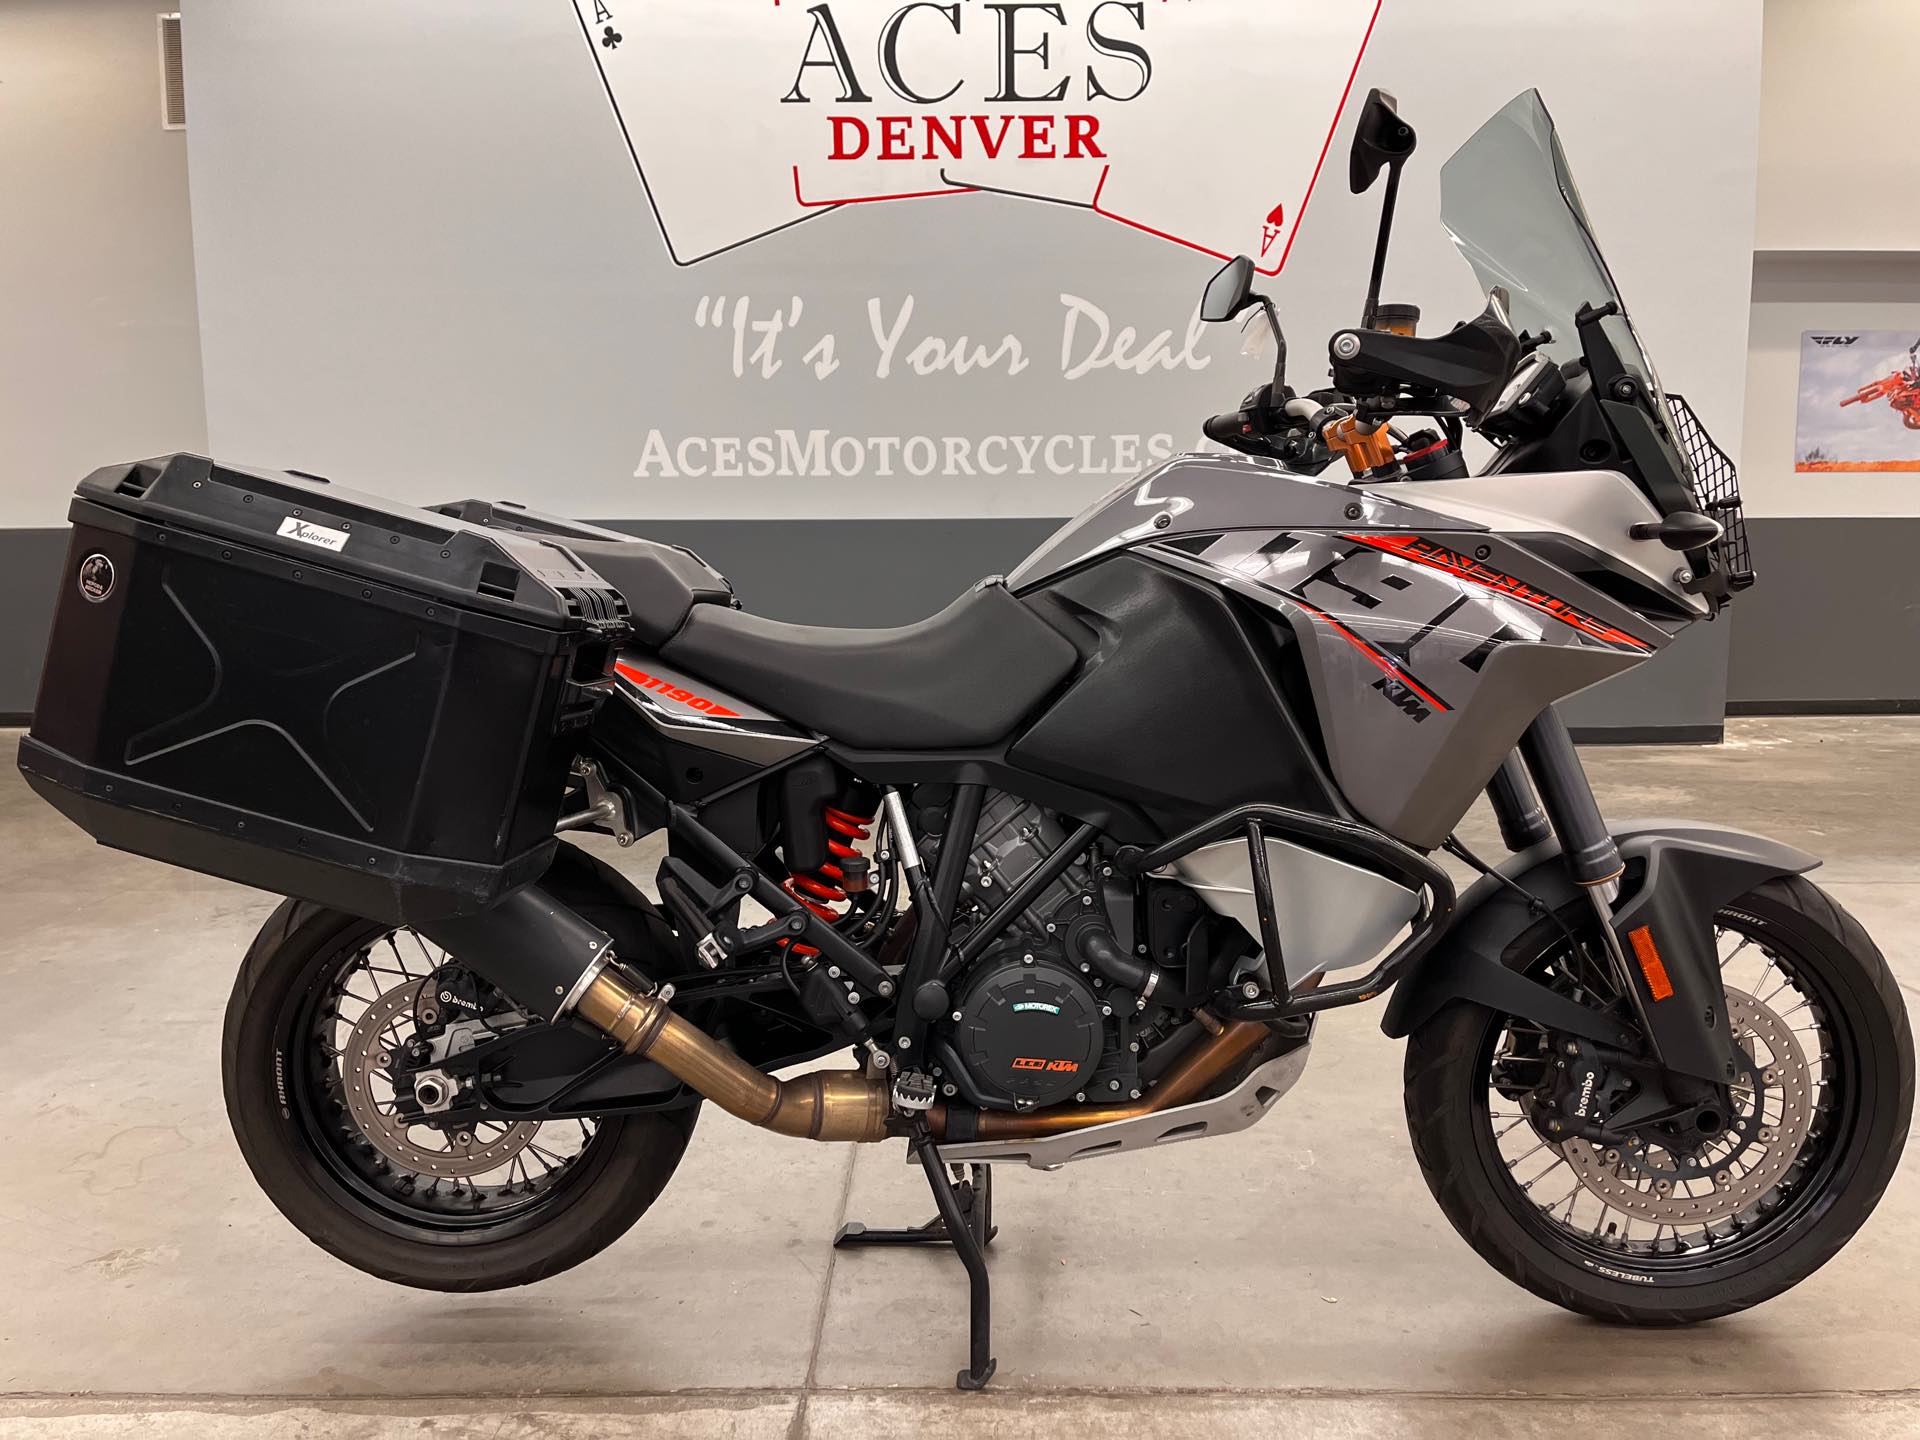 2016 KTM Adventure 1190 at Aces Motorcycles - Denver